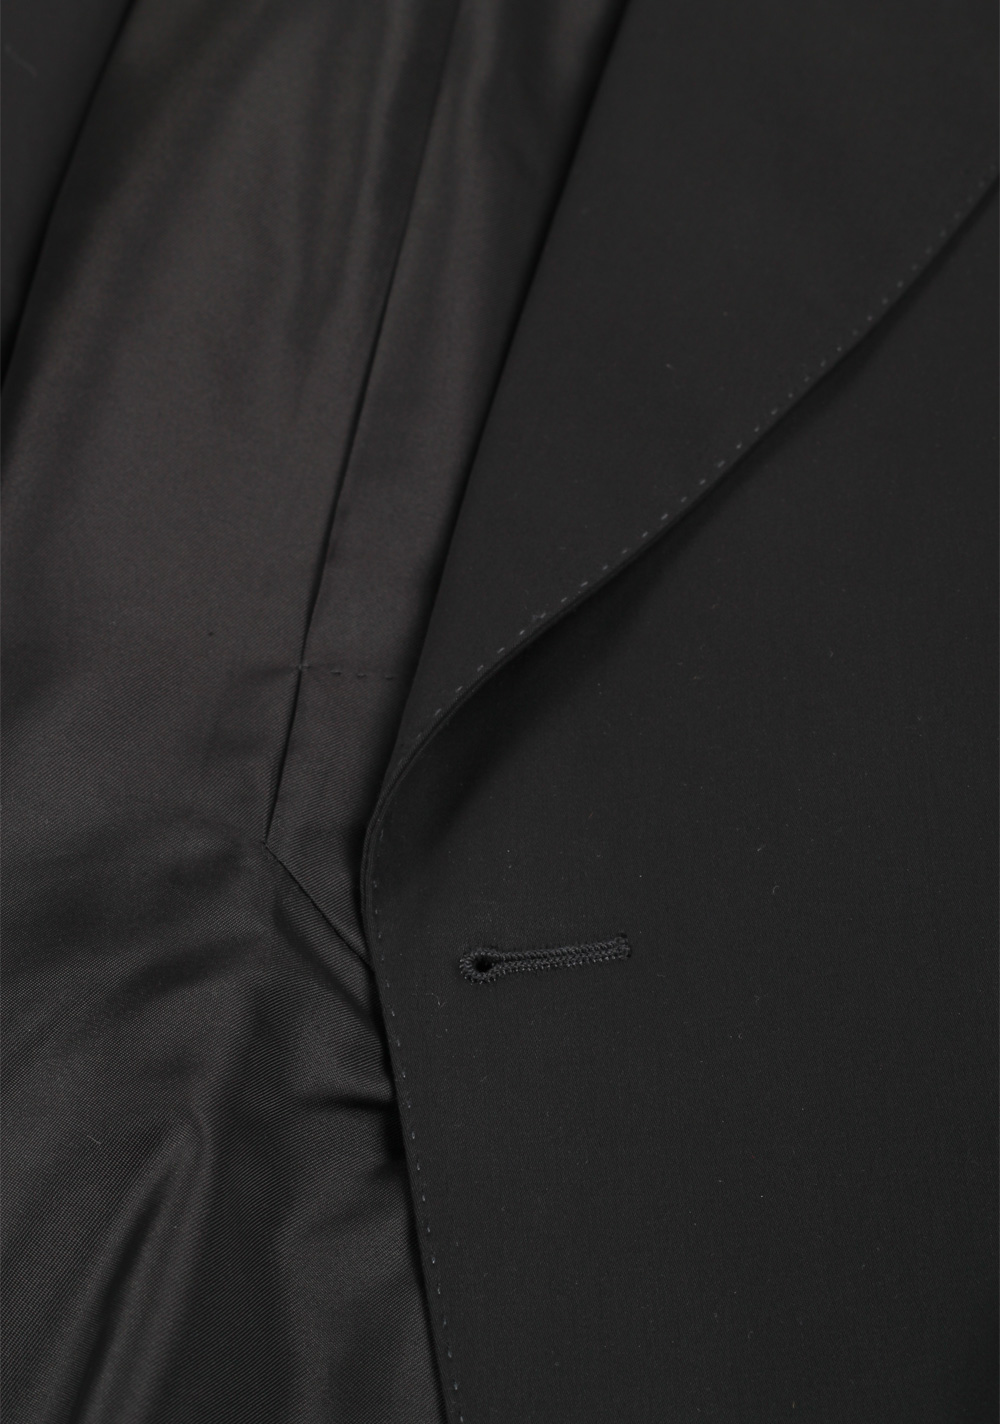 TOM FORD Atticus Black Sport Coat Size 46 / 36R U.S. In Cotton | Costume Limité